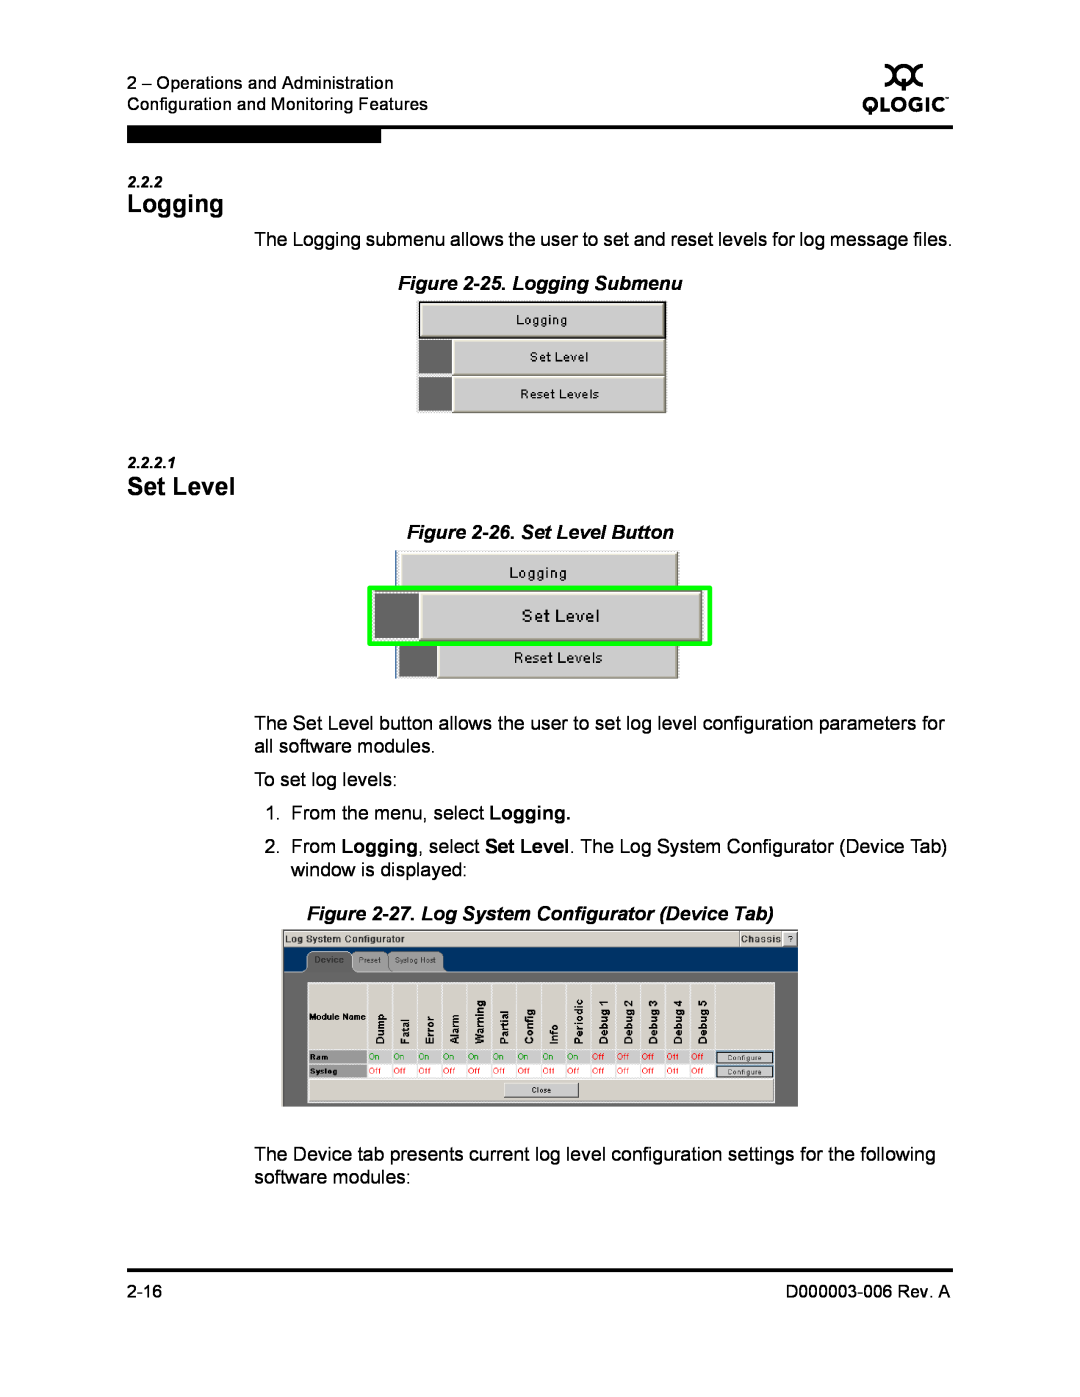 Q-Logic 9000 manual 25. Logging Submenu, 26. Set Level Button, 27. Log System Configurator Device Tab 